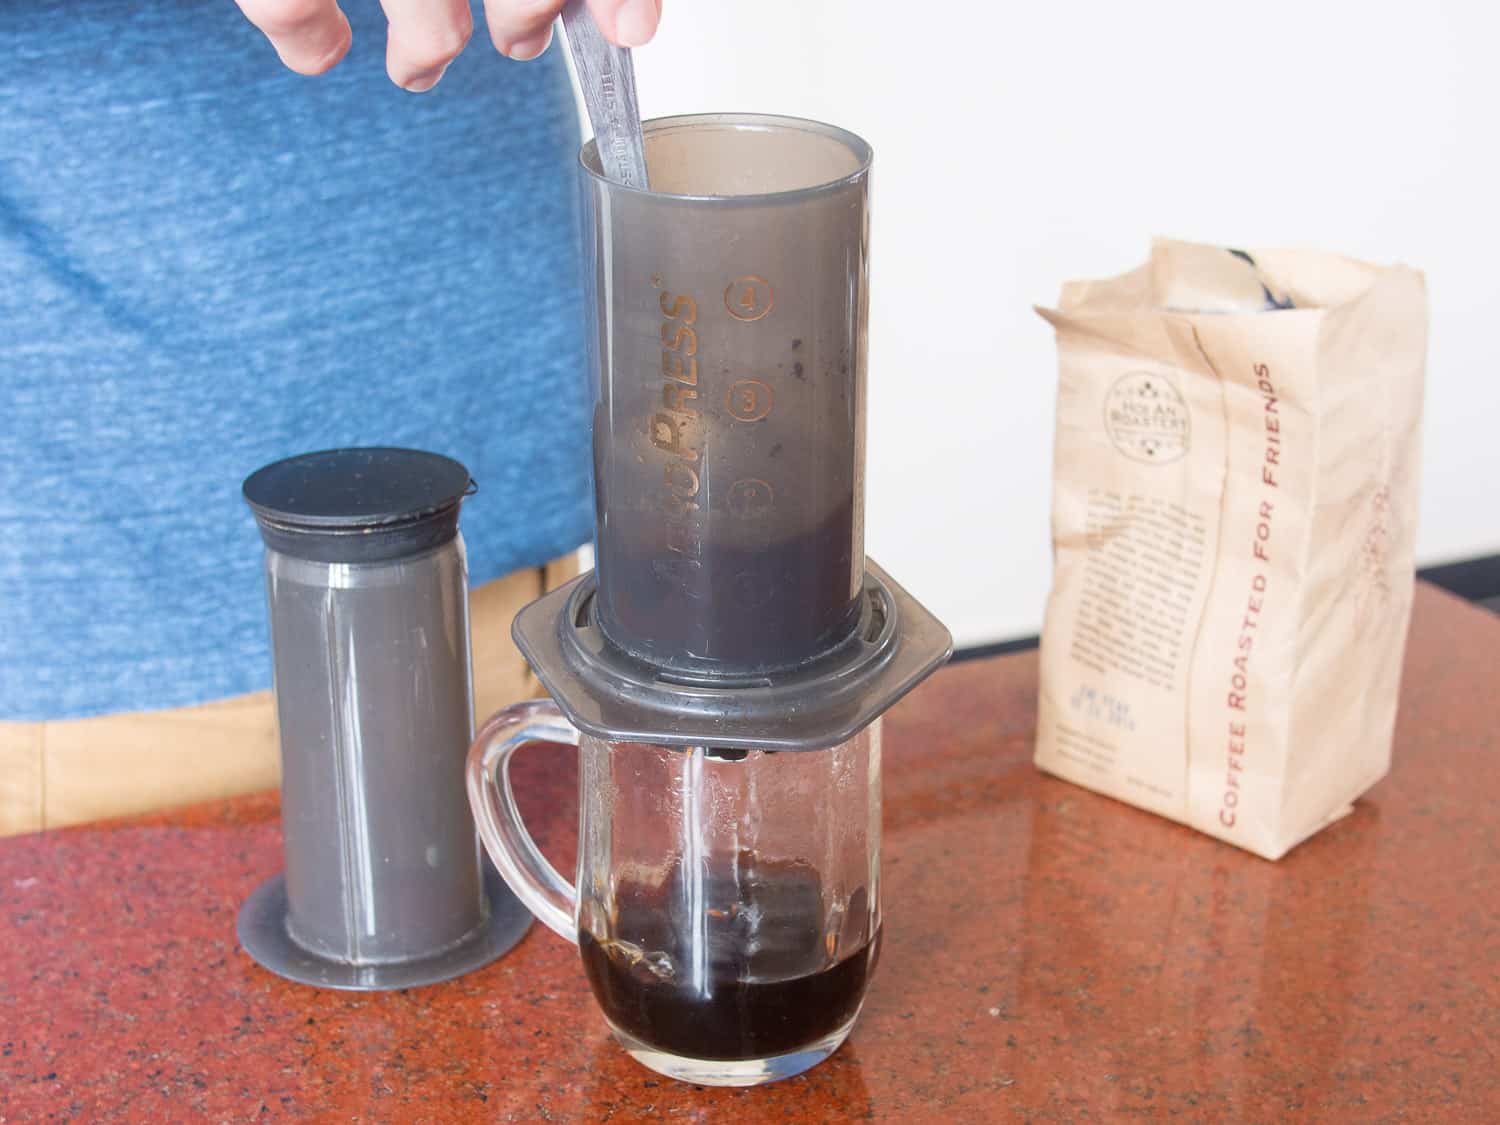 AeroPress: The Best Travel Coffee Maker